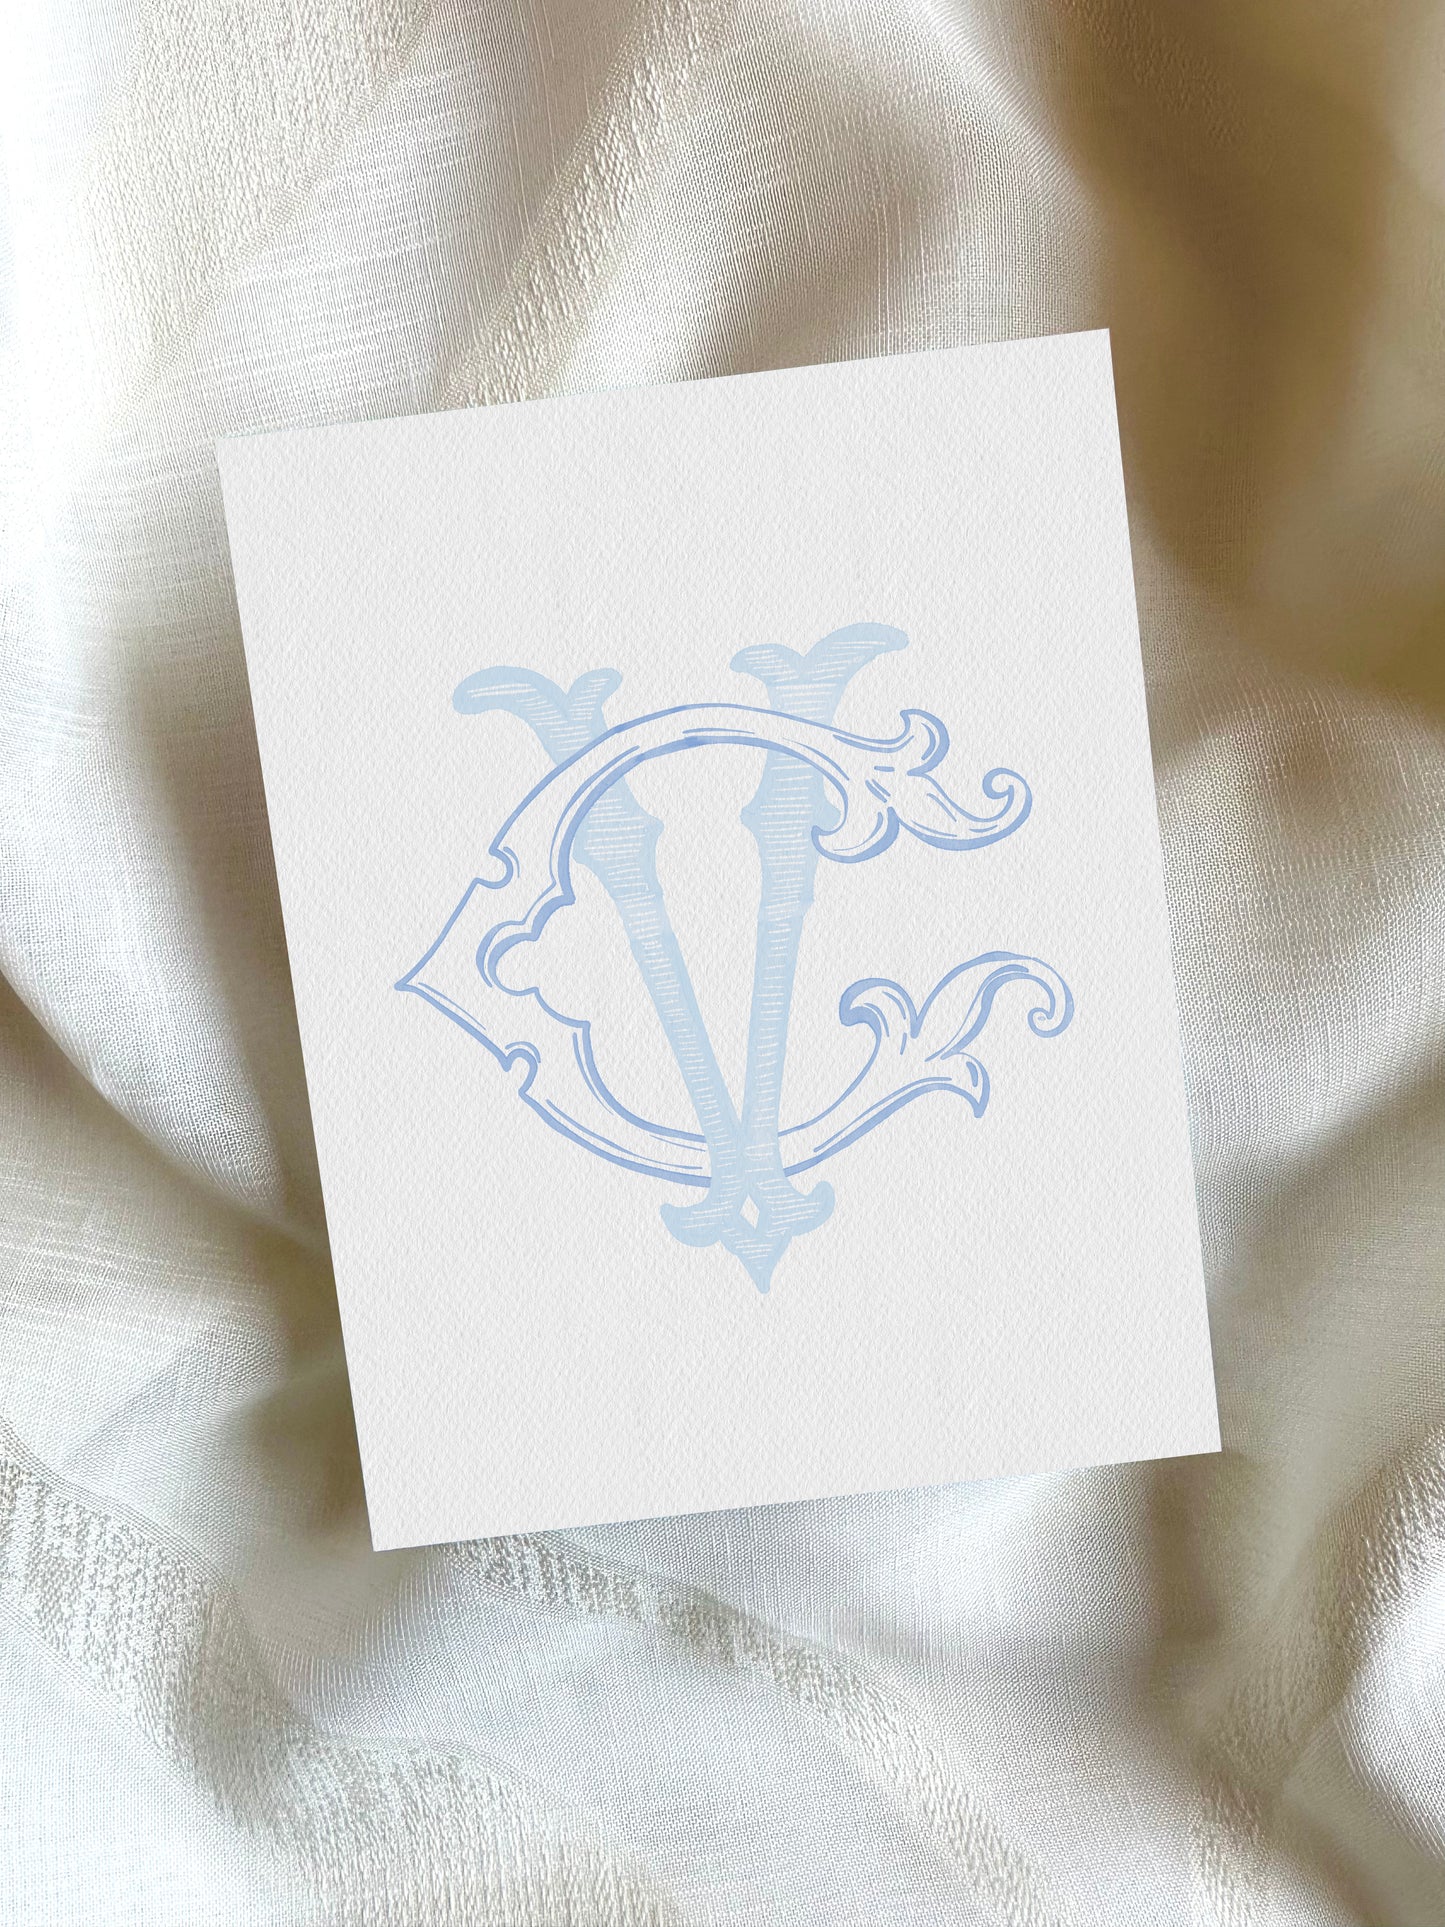 2 Letter Monogram with Letters CV VC | Digital Download - Wedding Monogram SVG, Personal Logo, Wedding Logo for Wedding Invitations The Wedding Crest Lab